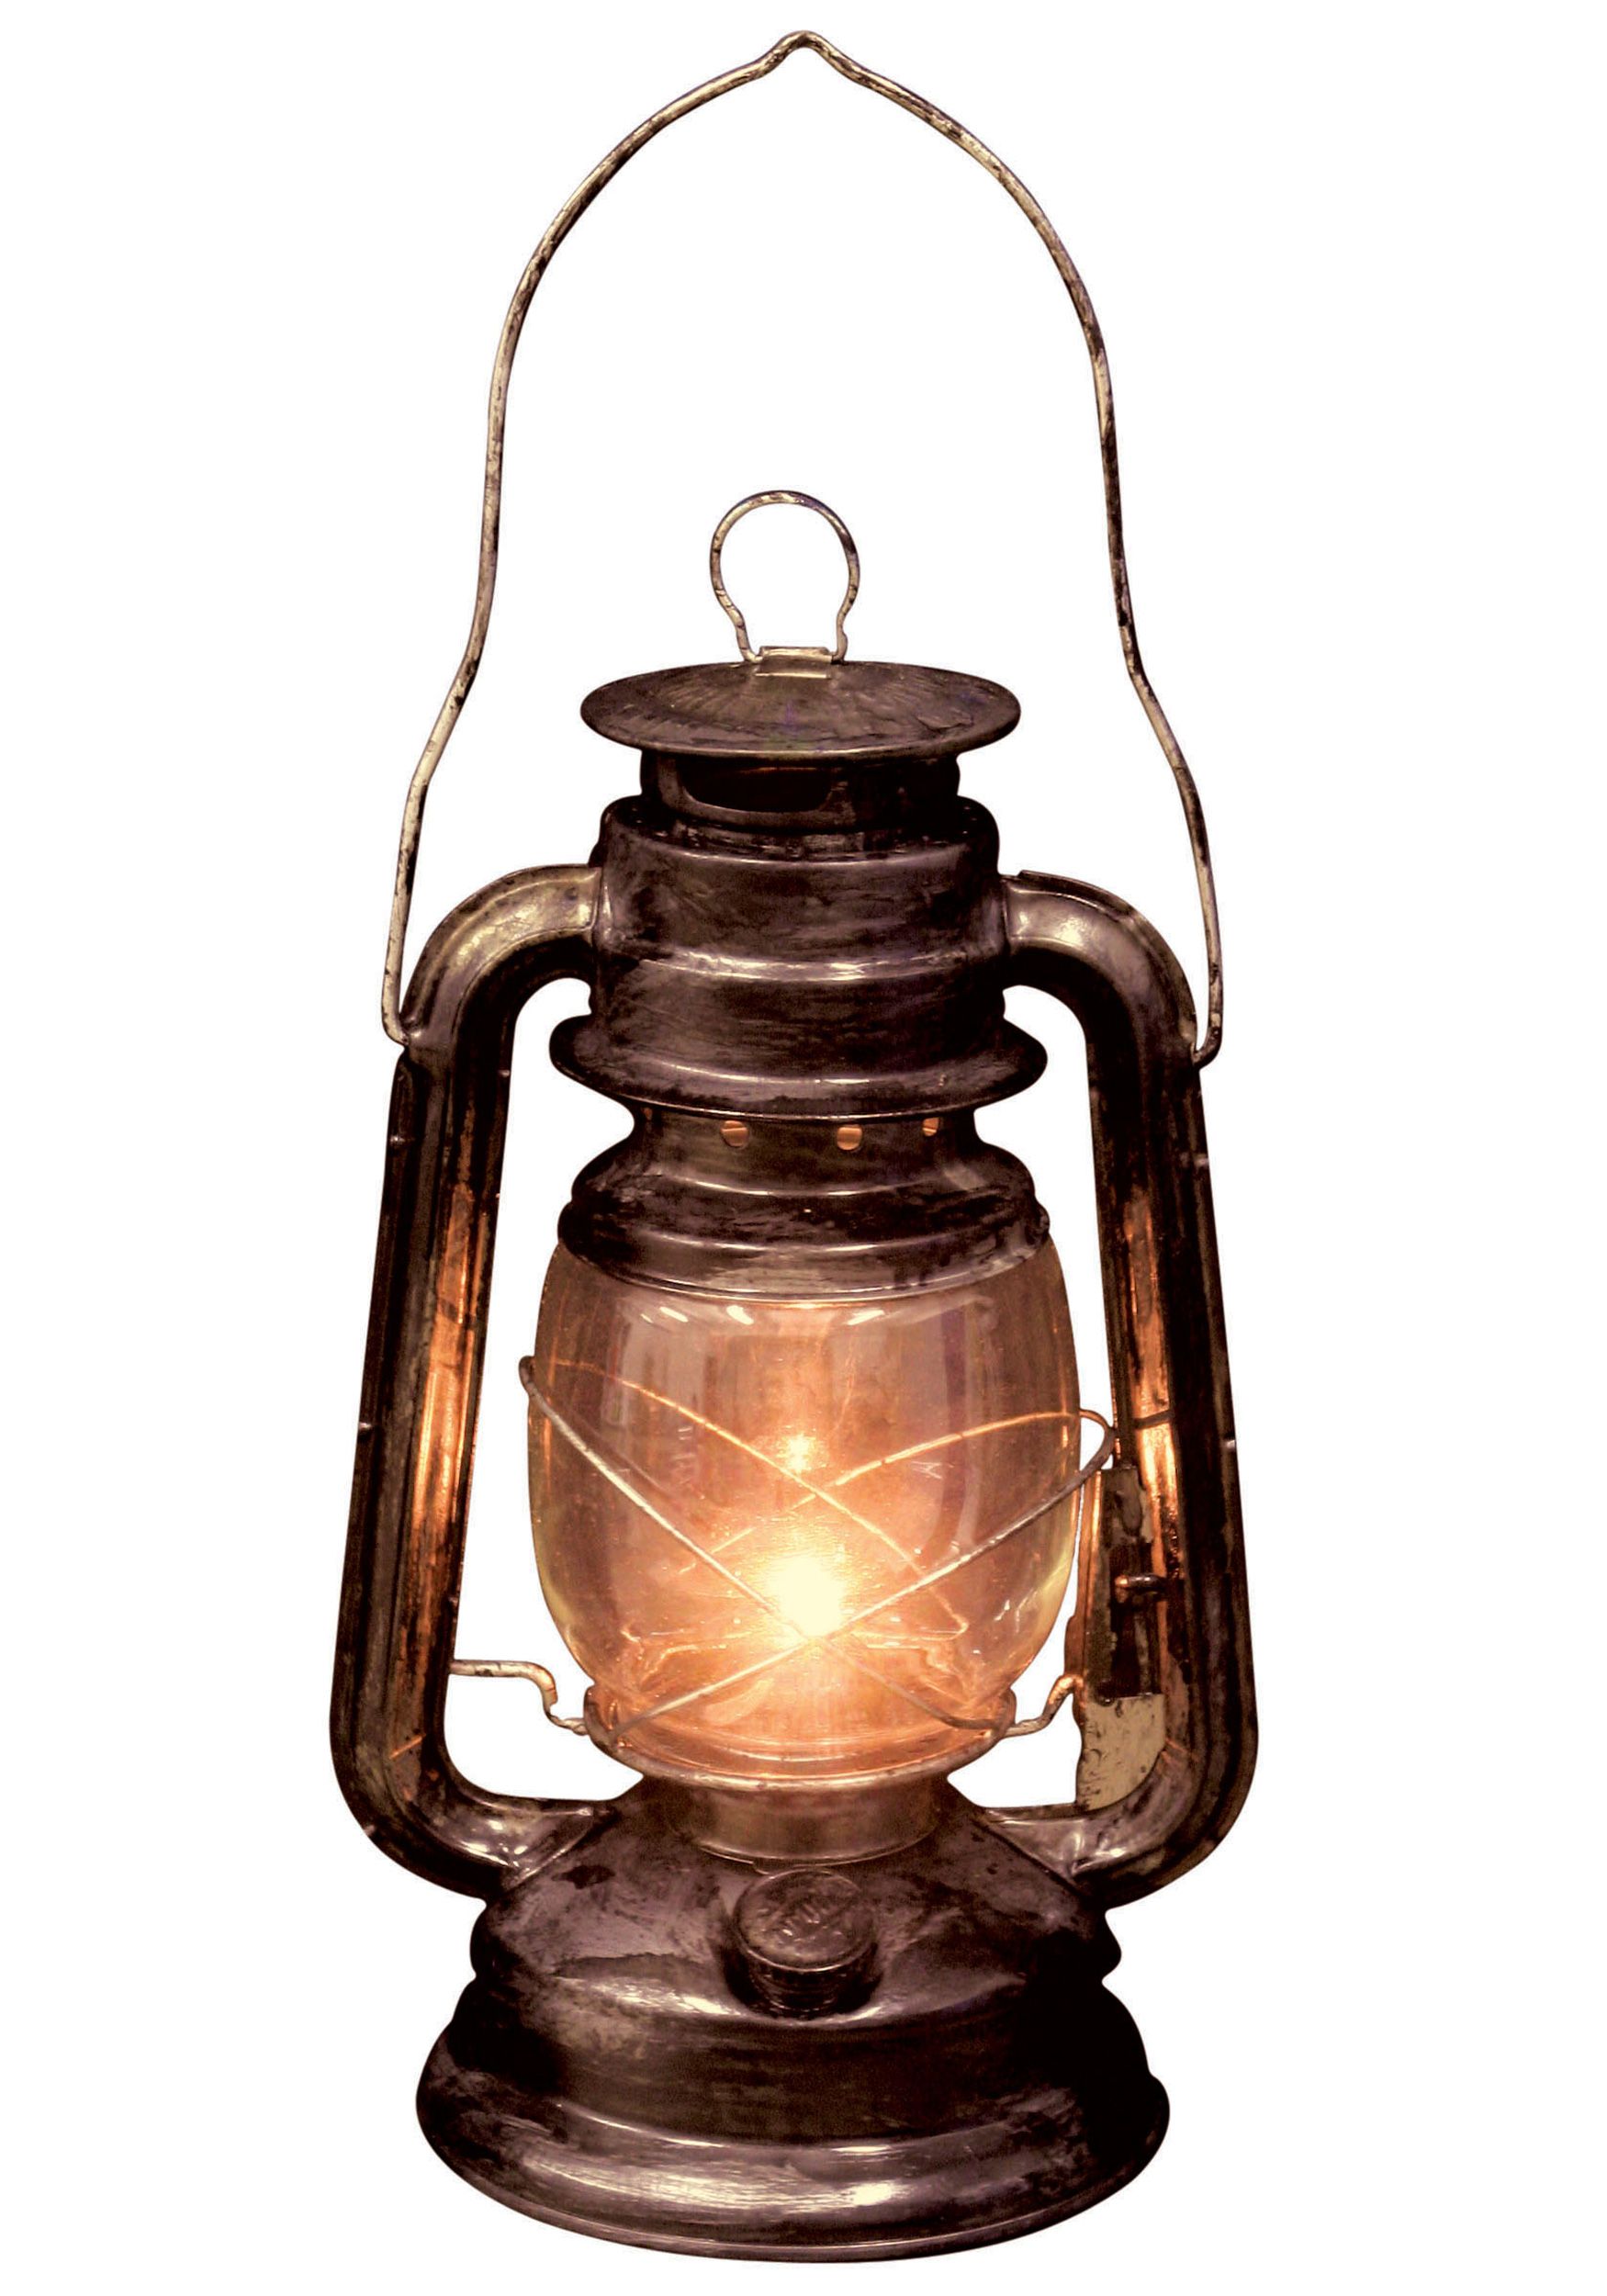 Light up Old Lantern | lamps and lighting | Pinterest | Lights ...